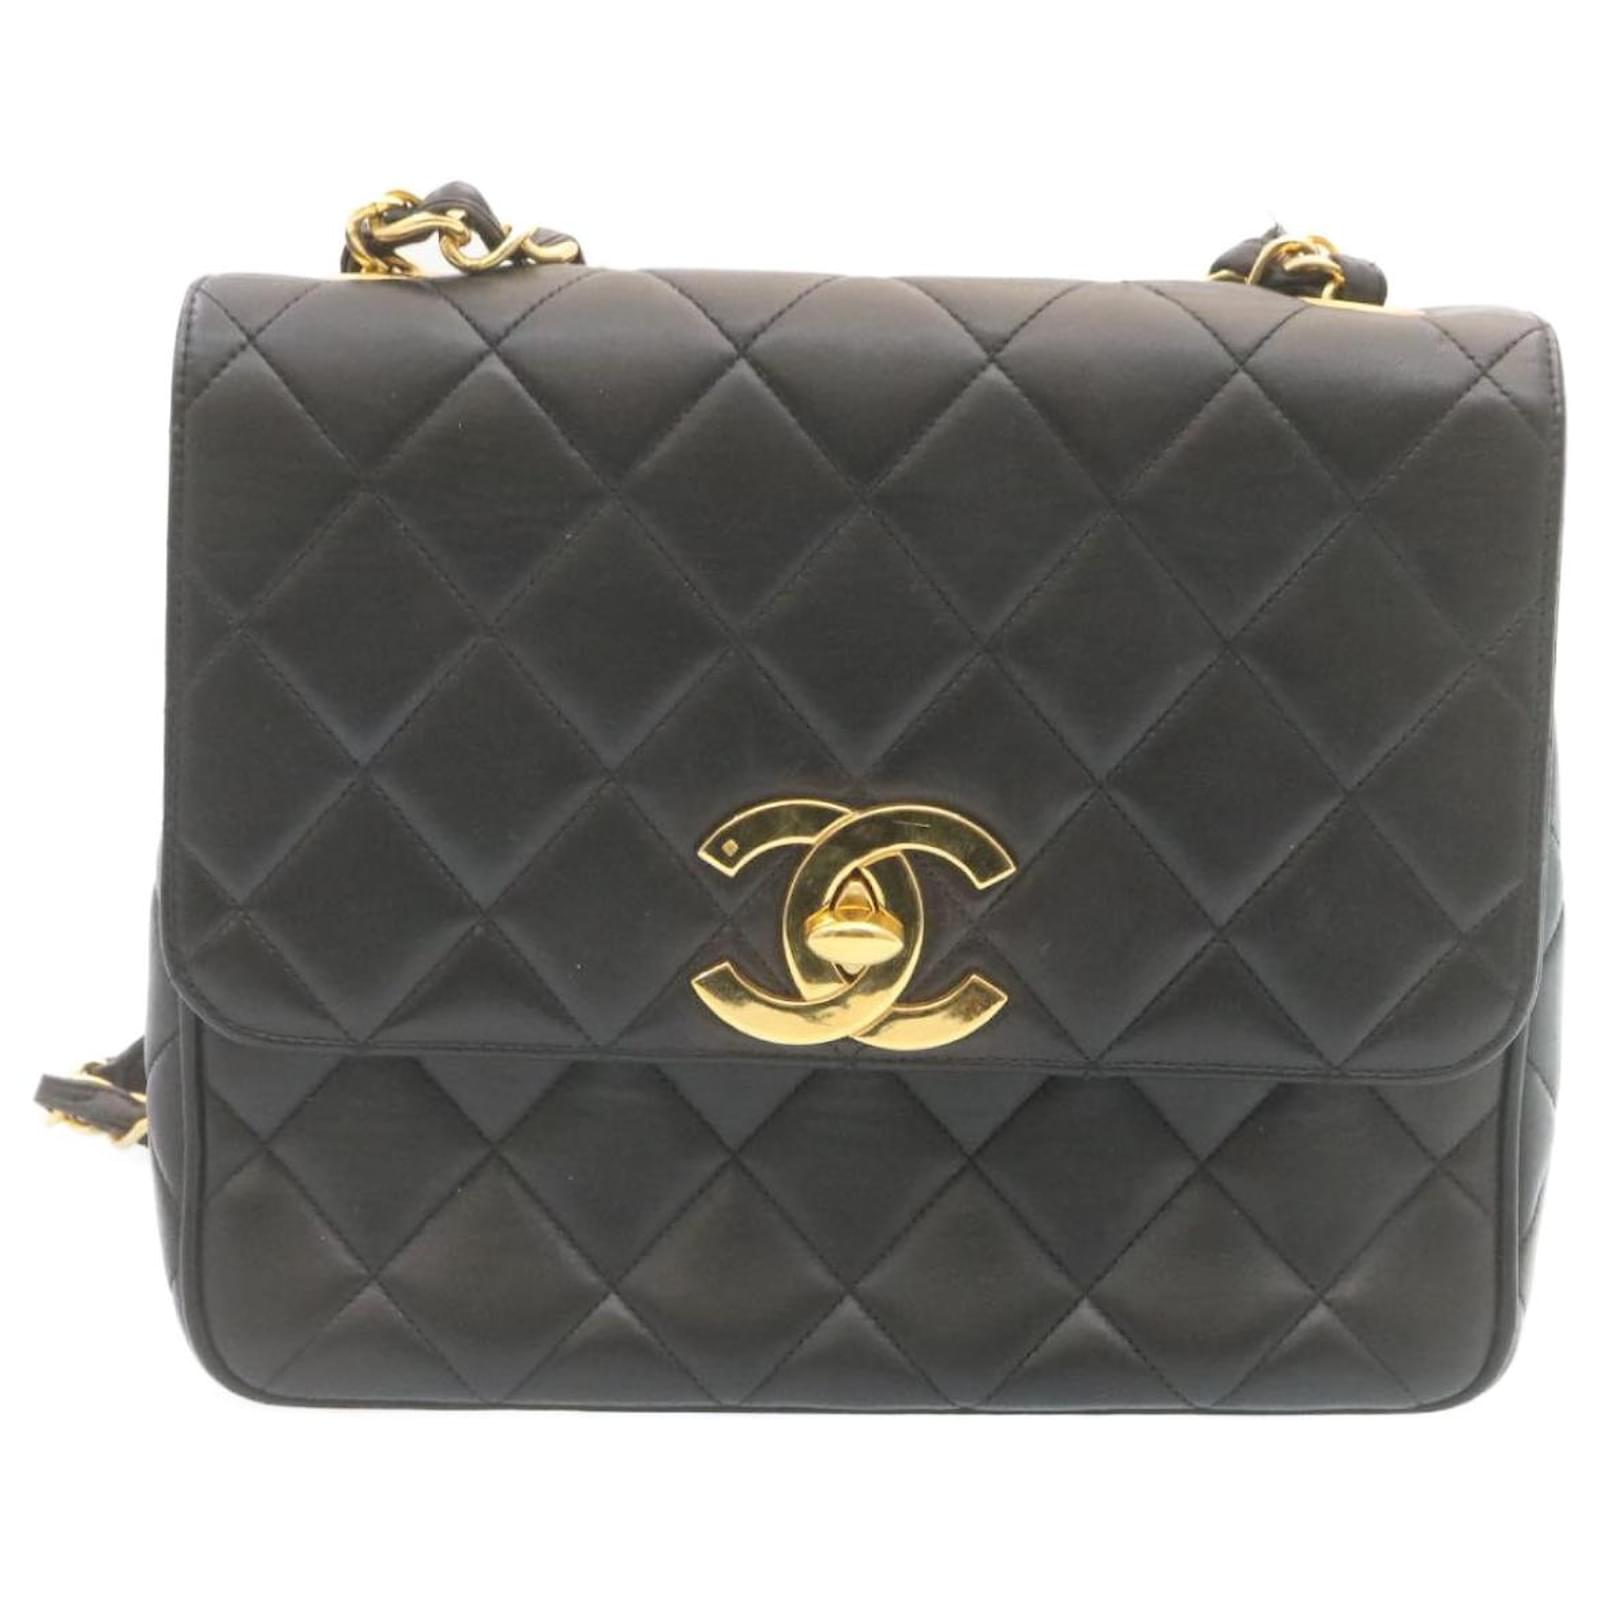 Chanel Satin Black Matelasse Gold Chain Shoulder Bag Coco Mark 0022 CHANEL  | eLADY Globazone